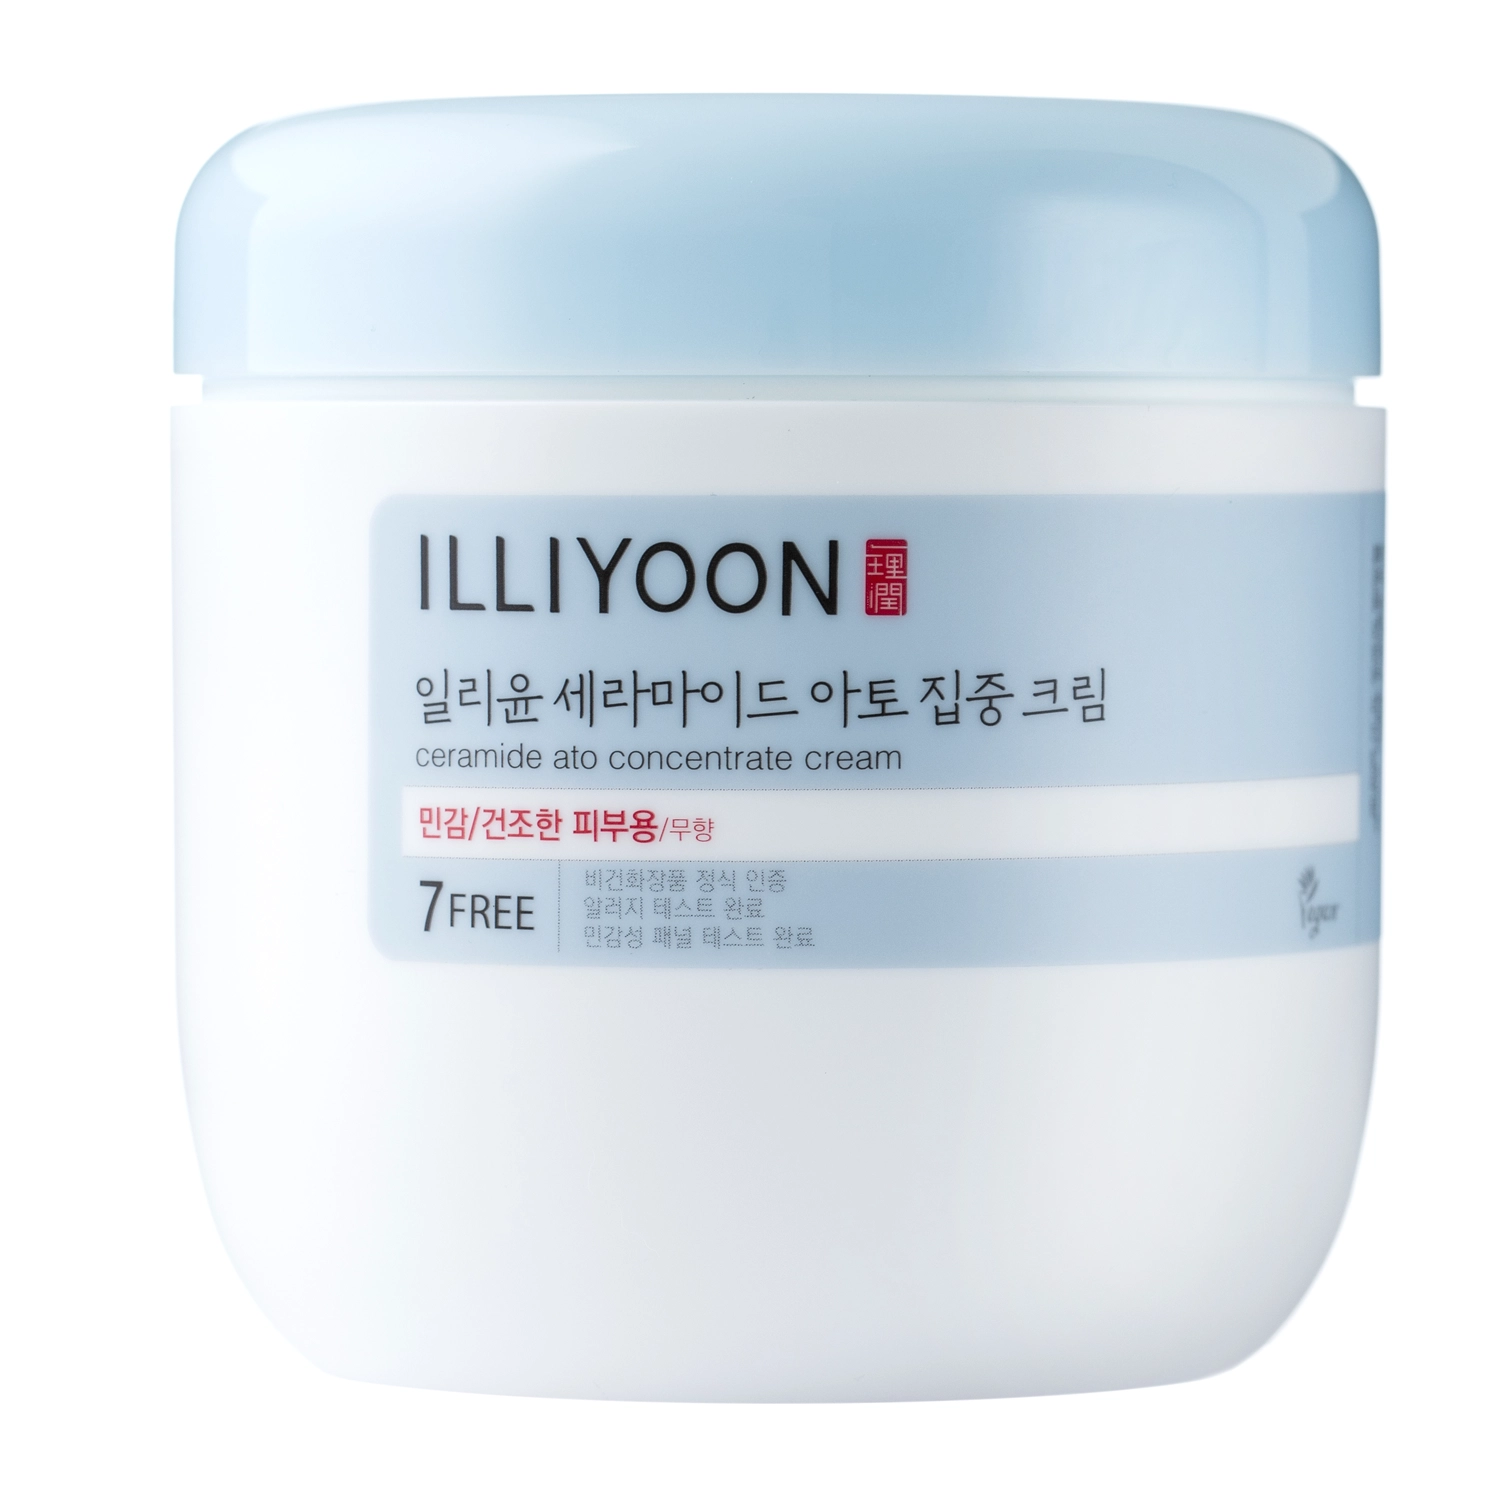 ILLIYOON - Ceramide Ato Concentrate Cream - Увлажняющий крем для лица и тела с церамидами - 500ml